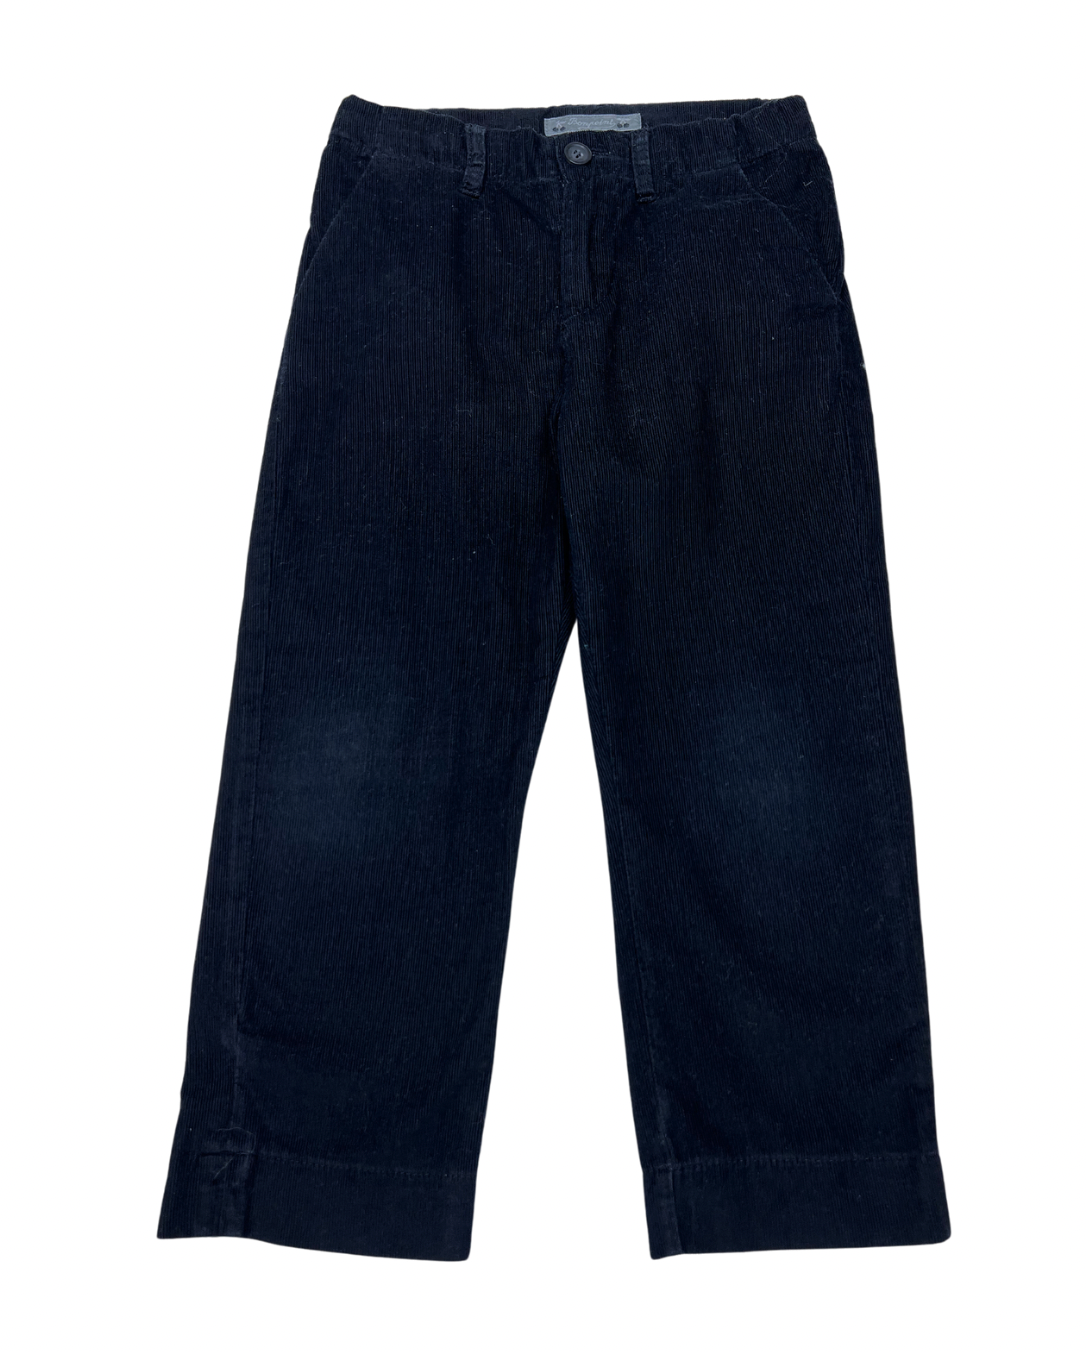 BONPOINT - Pantalon en velours noir - 4 ans